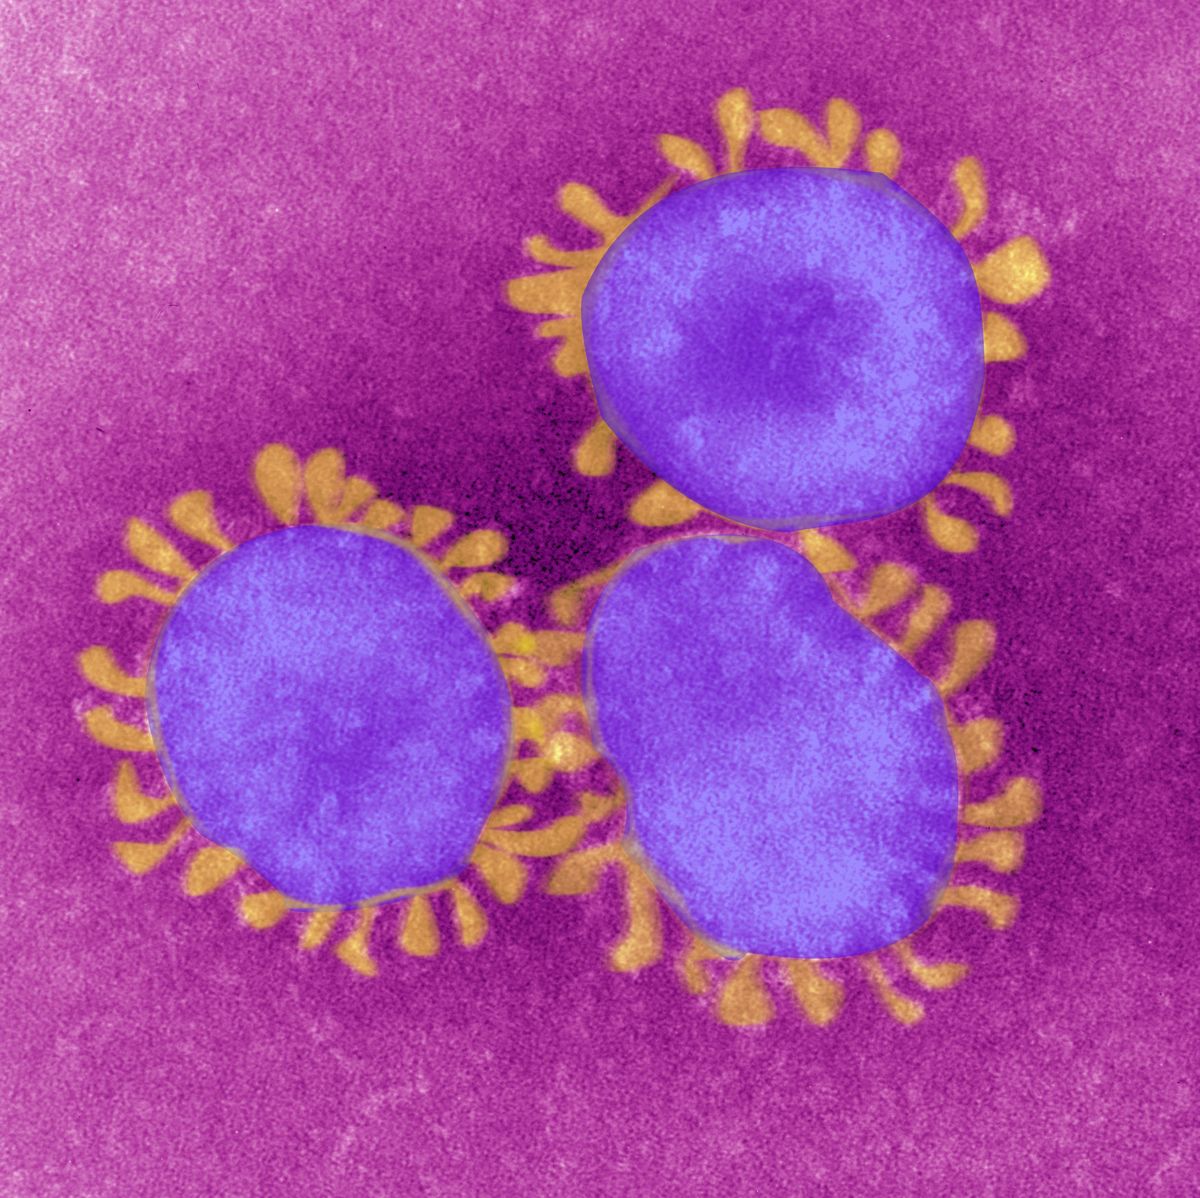 can coronavirus spread before symptoms show